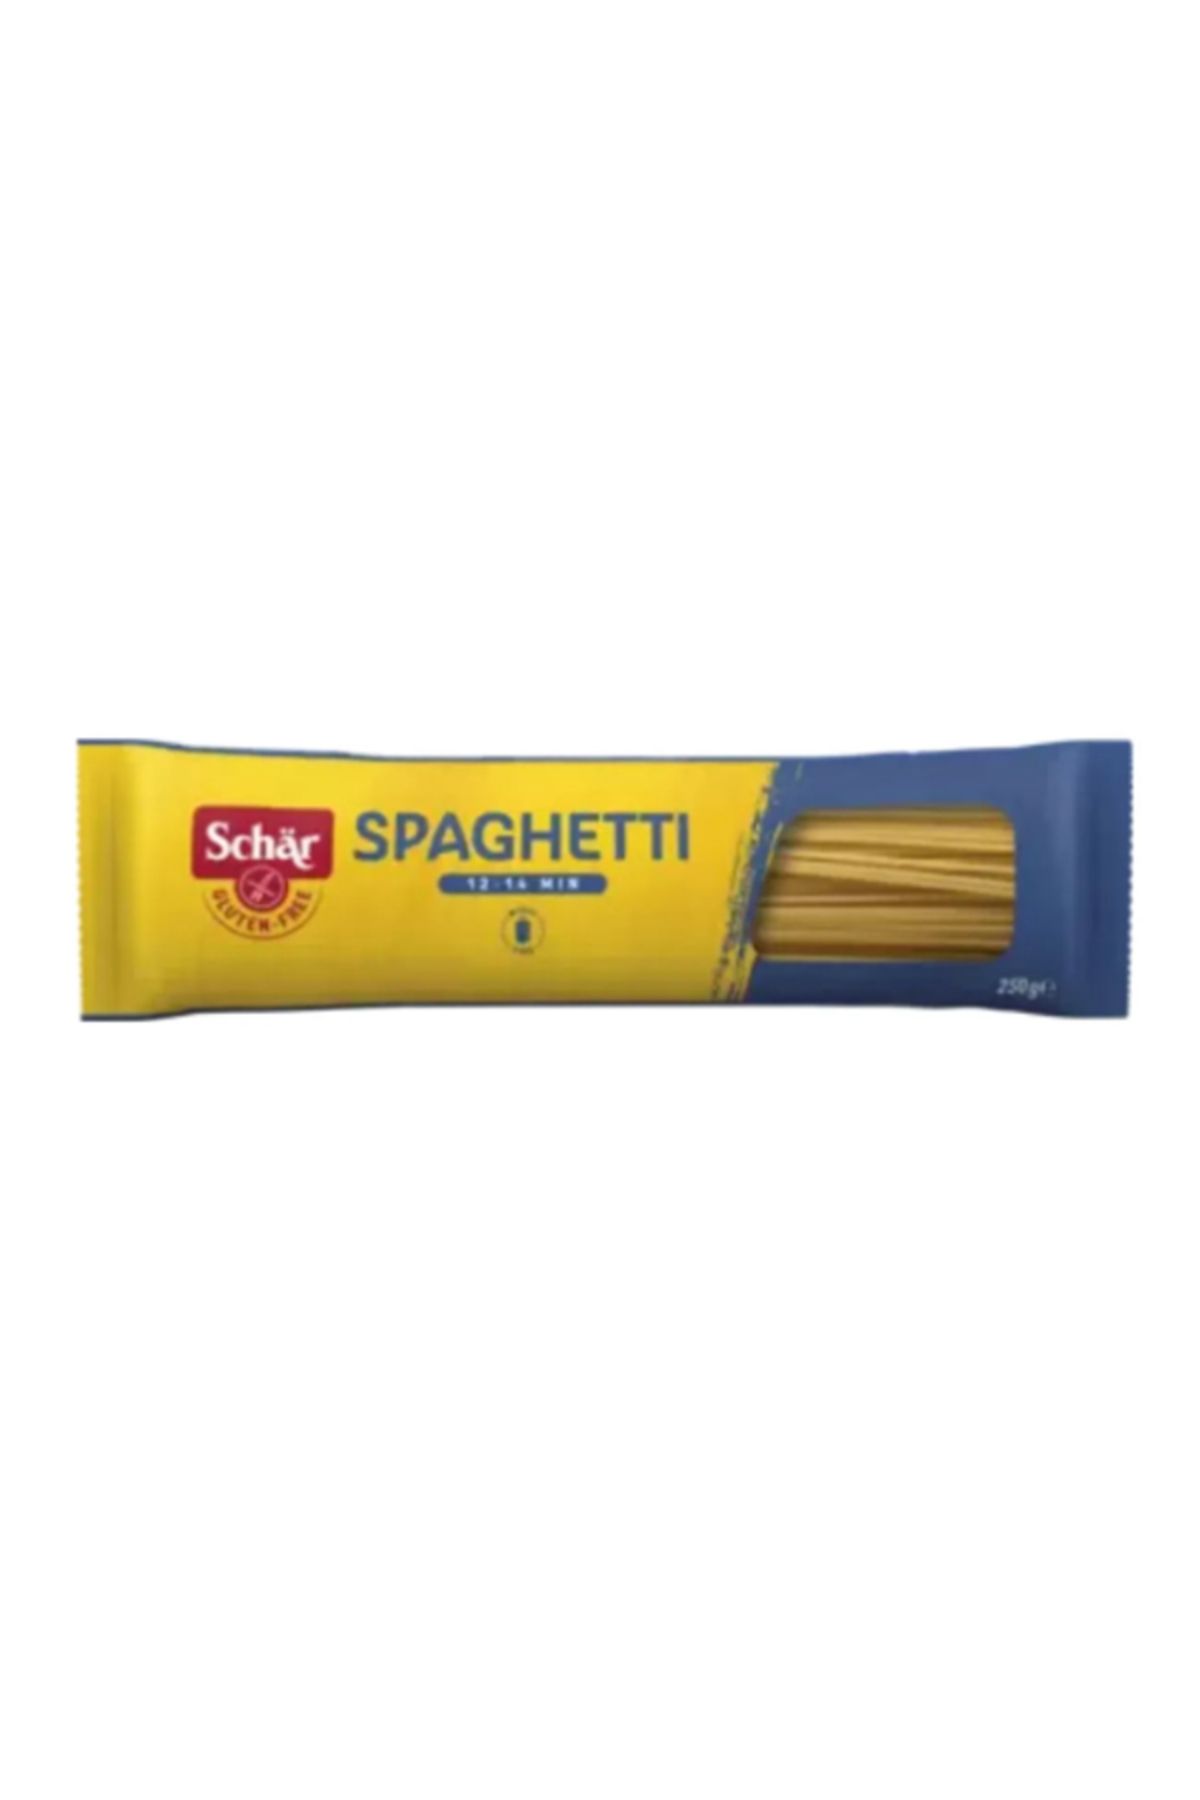 Schar Gluten Free Spaghetti 250g